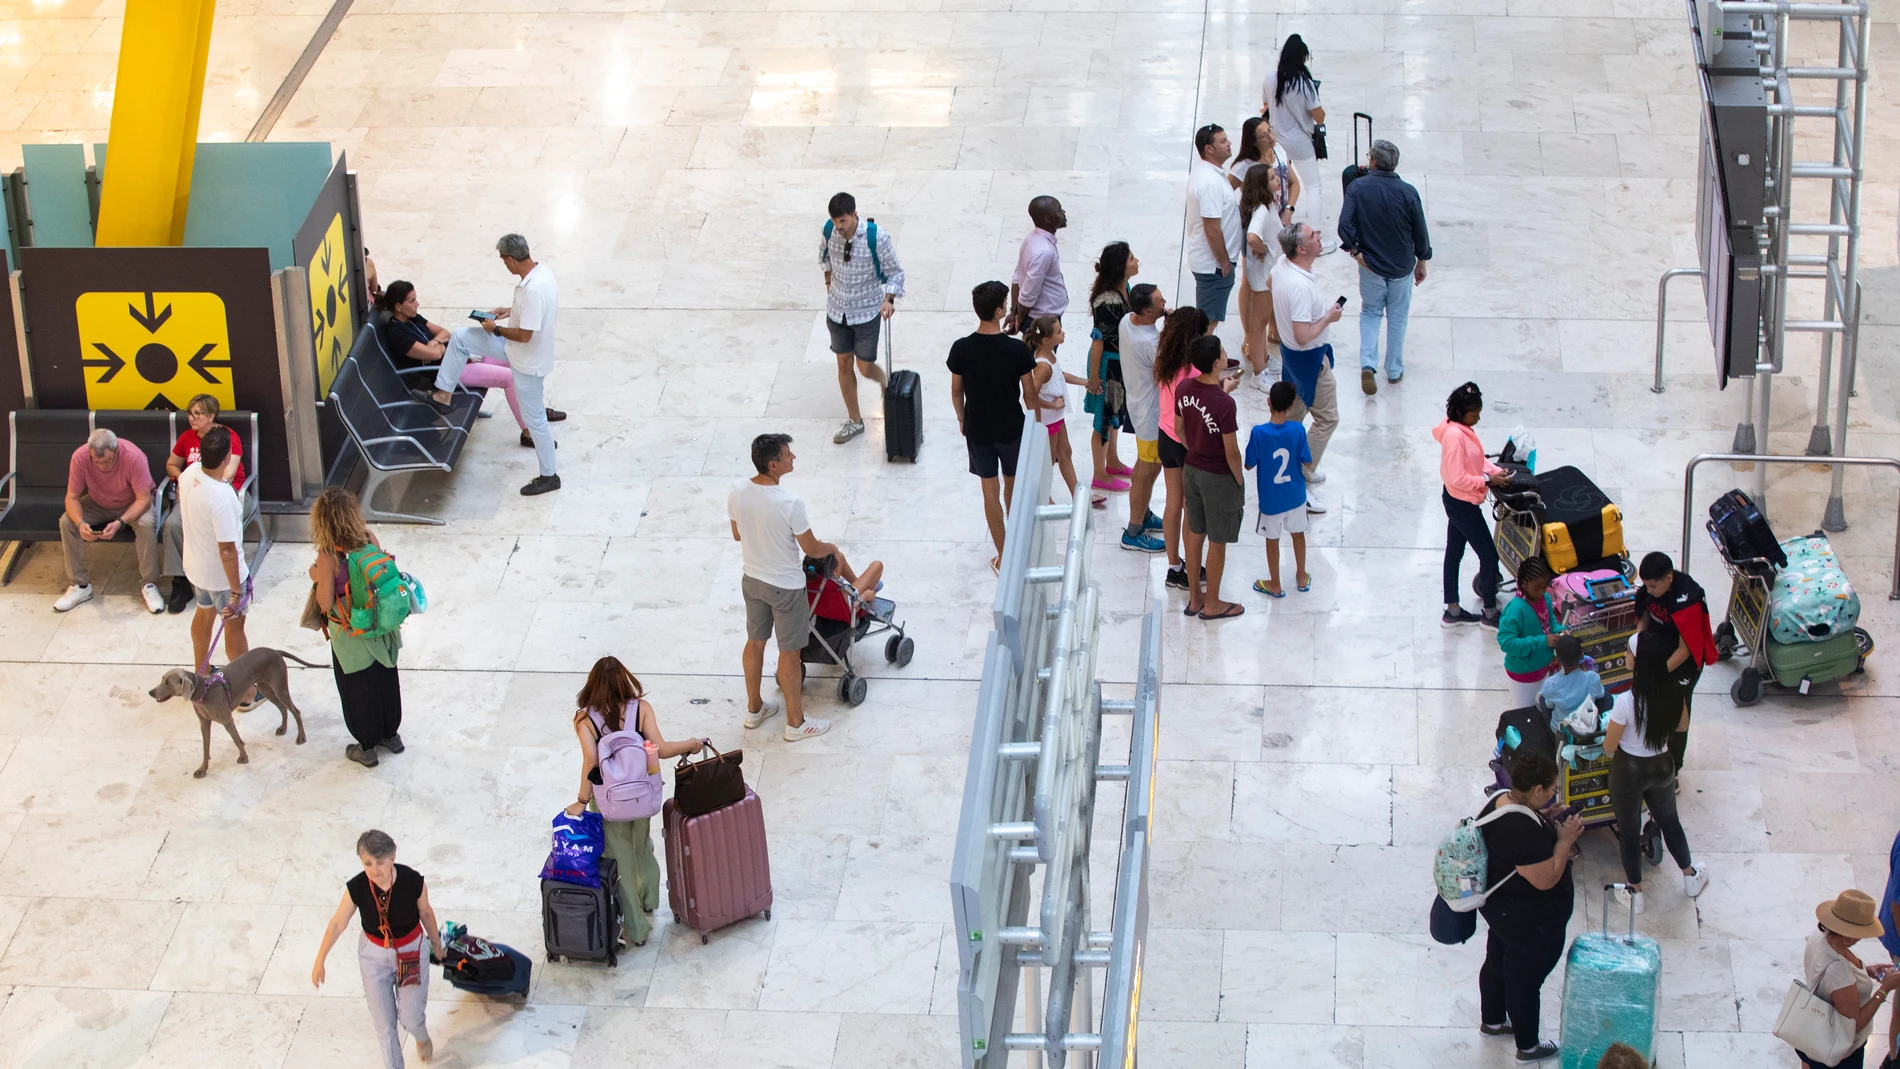  Viajeros y turistas con maletas en la terminal T4 del aeropuerto Adolfo Suarez Madrid Barajas. © Jesús G. Feria.